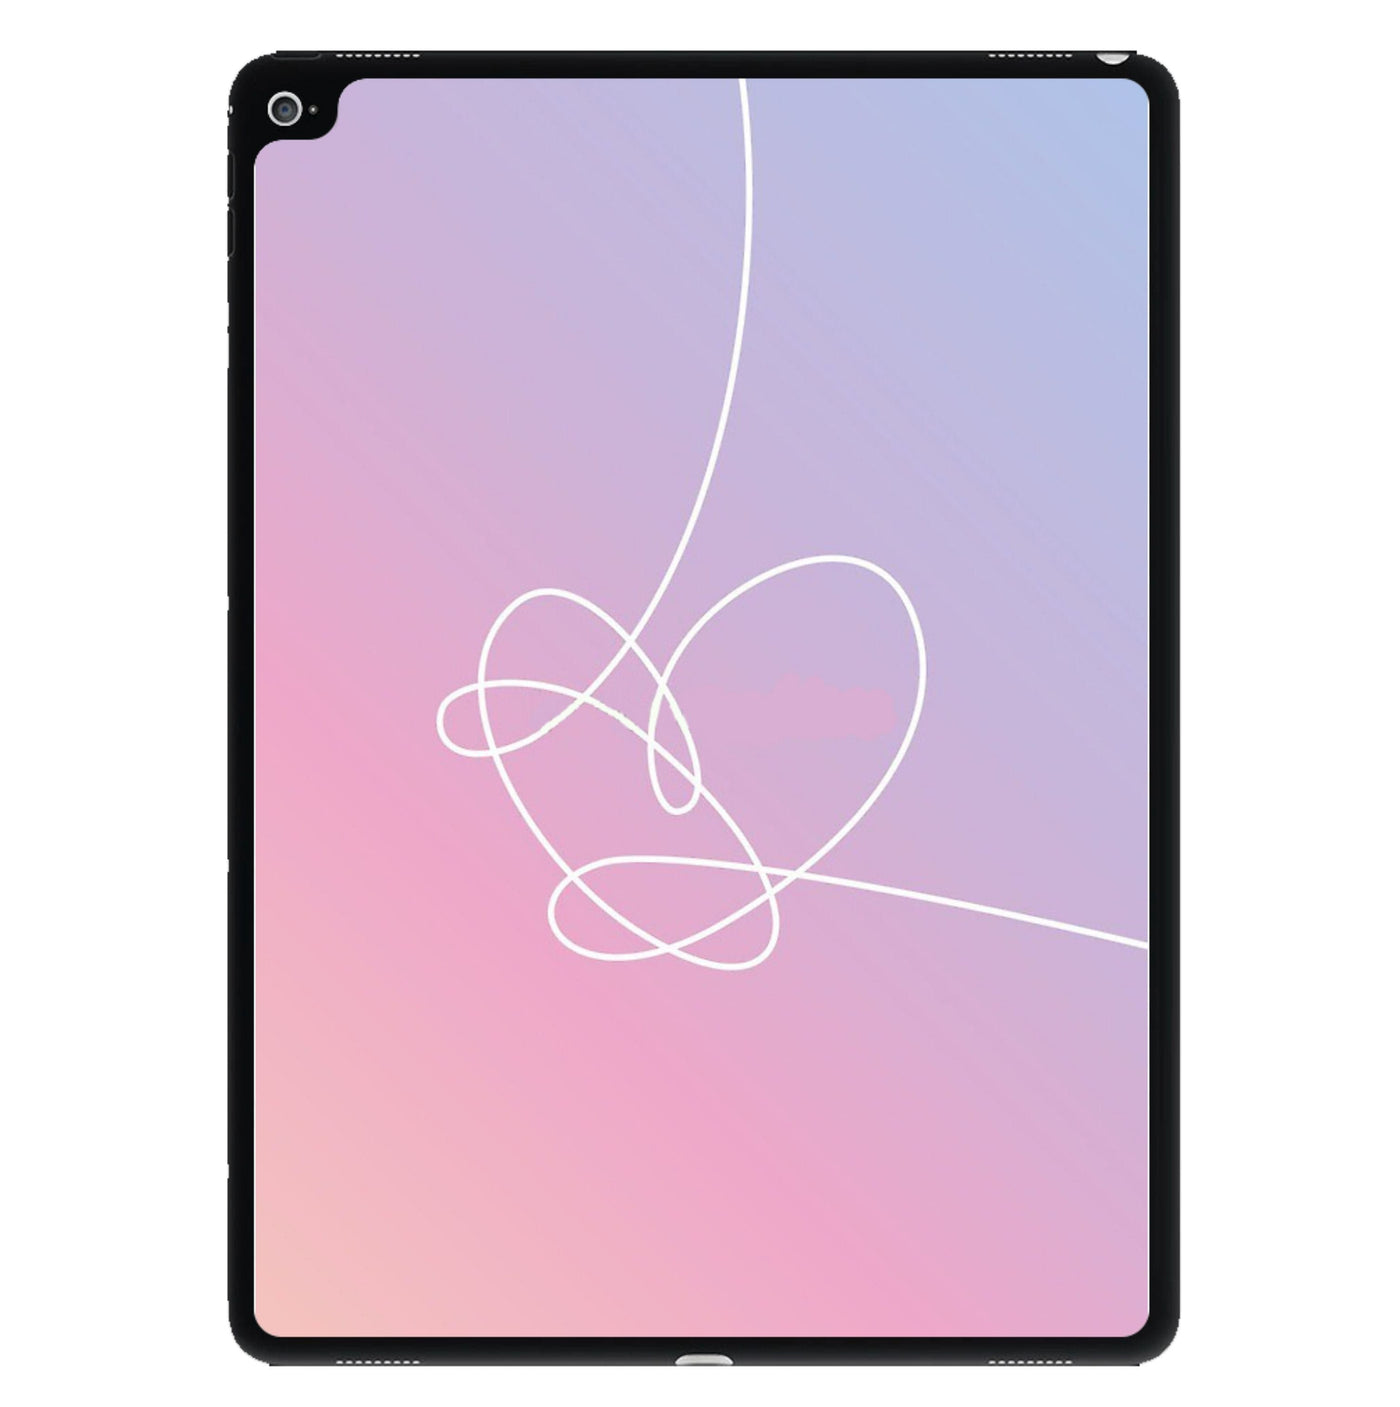 Love Yourself Answer Album - BTS iPad Case